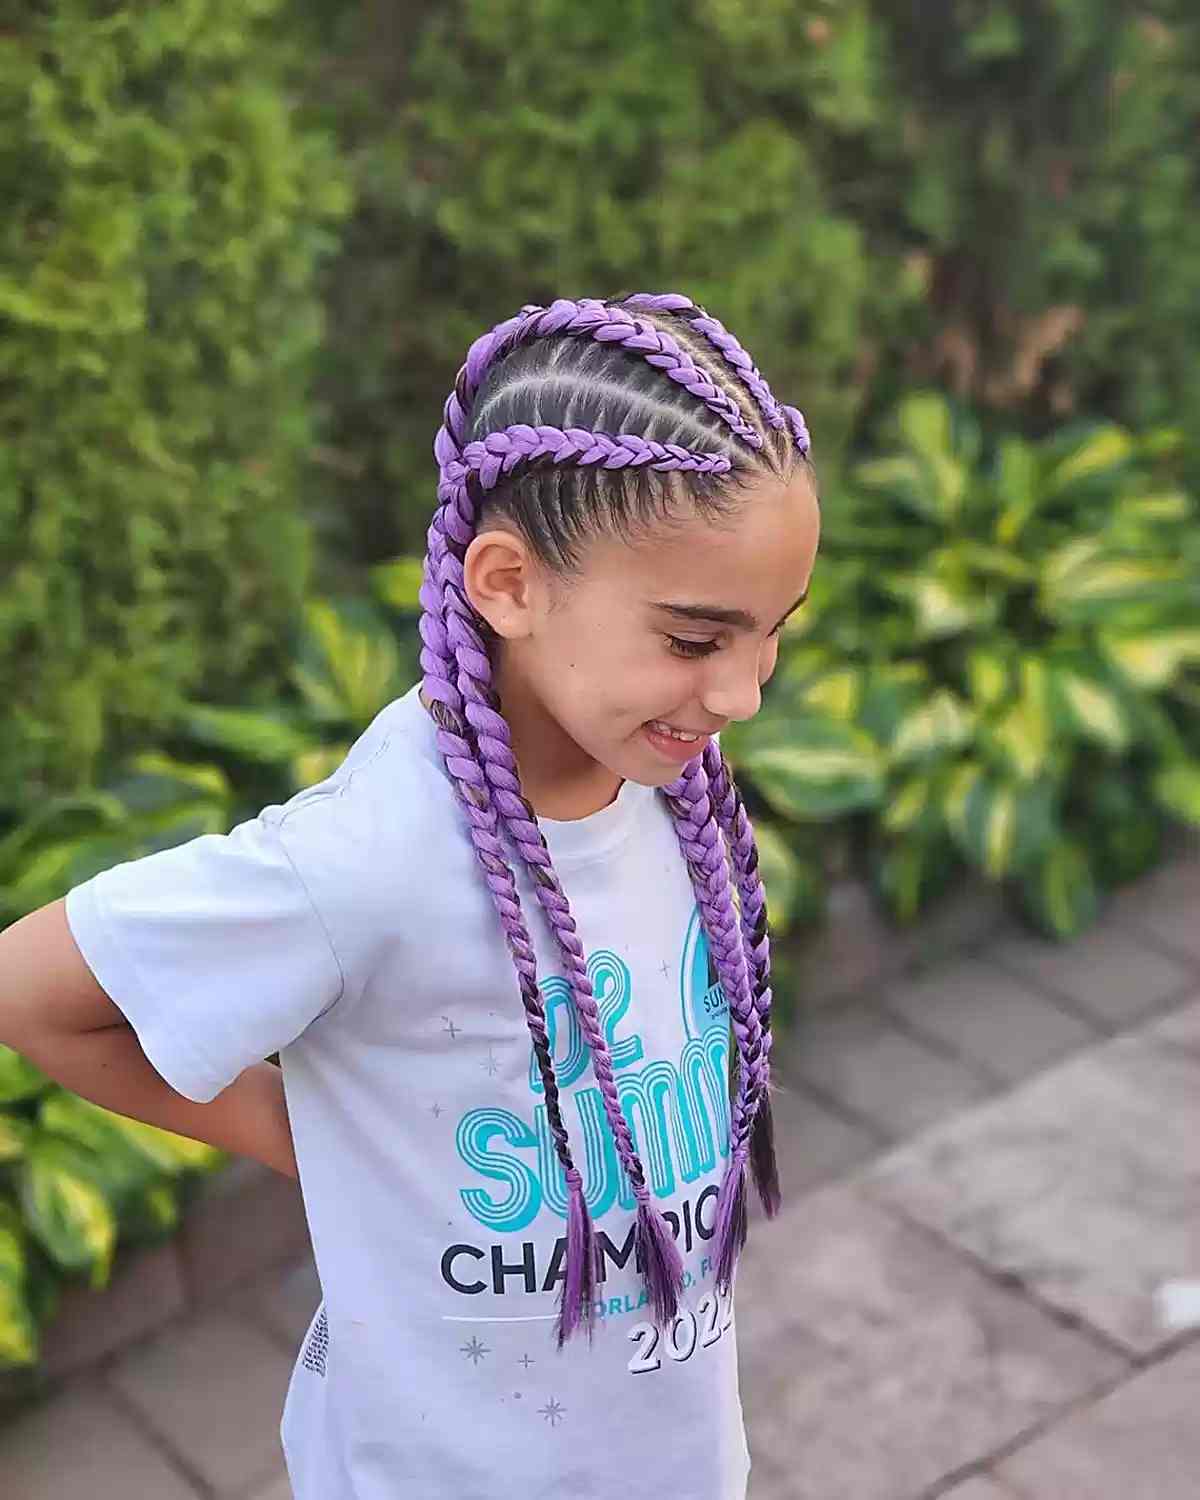 Long 4-Braid Purple Hairstyle for Softball Kids